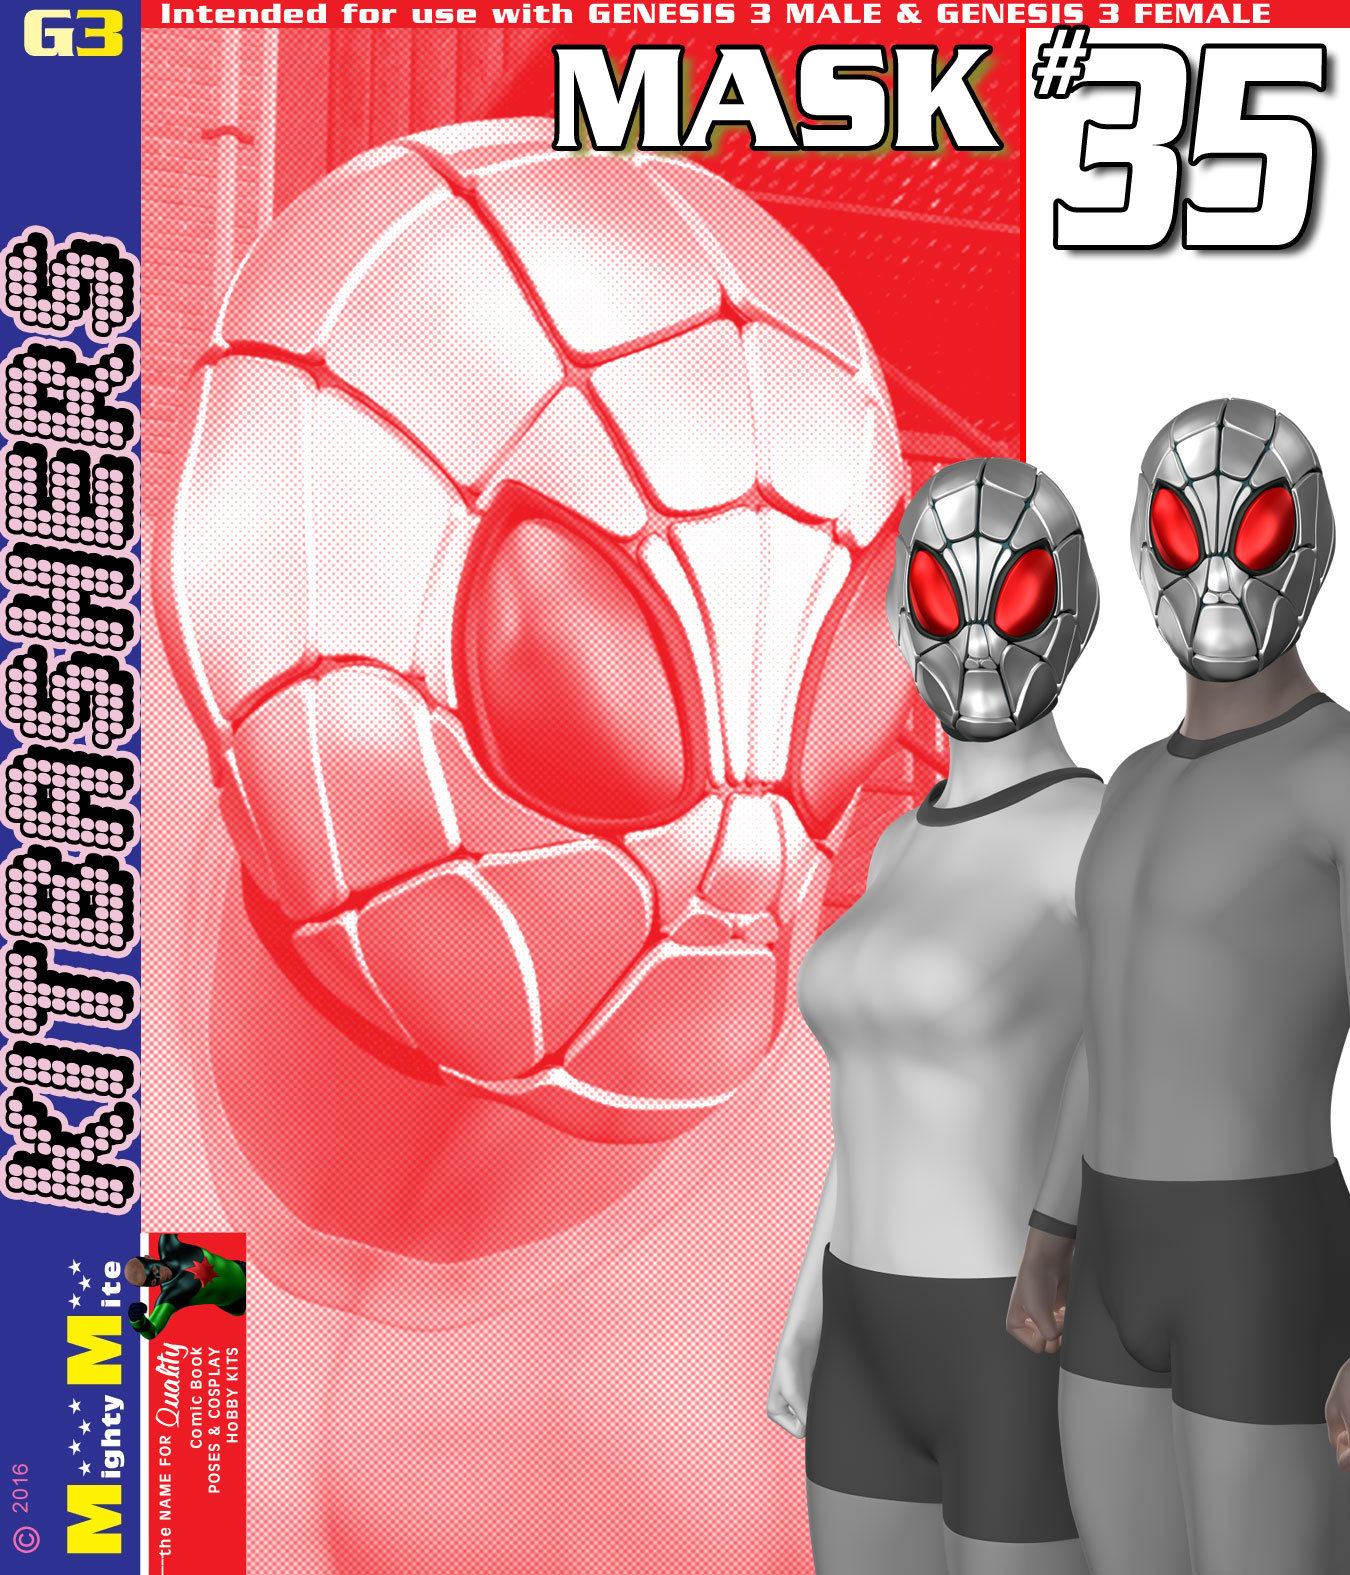 Mask 035 MMKBG3 by: MightyMite, 3D Models by Daz 3D